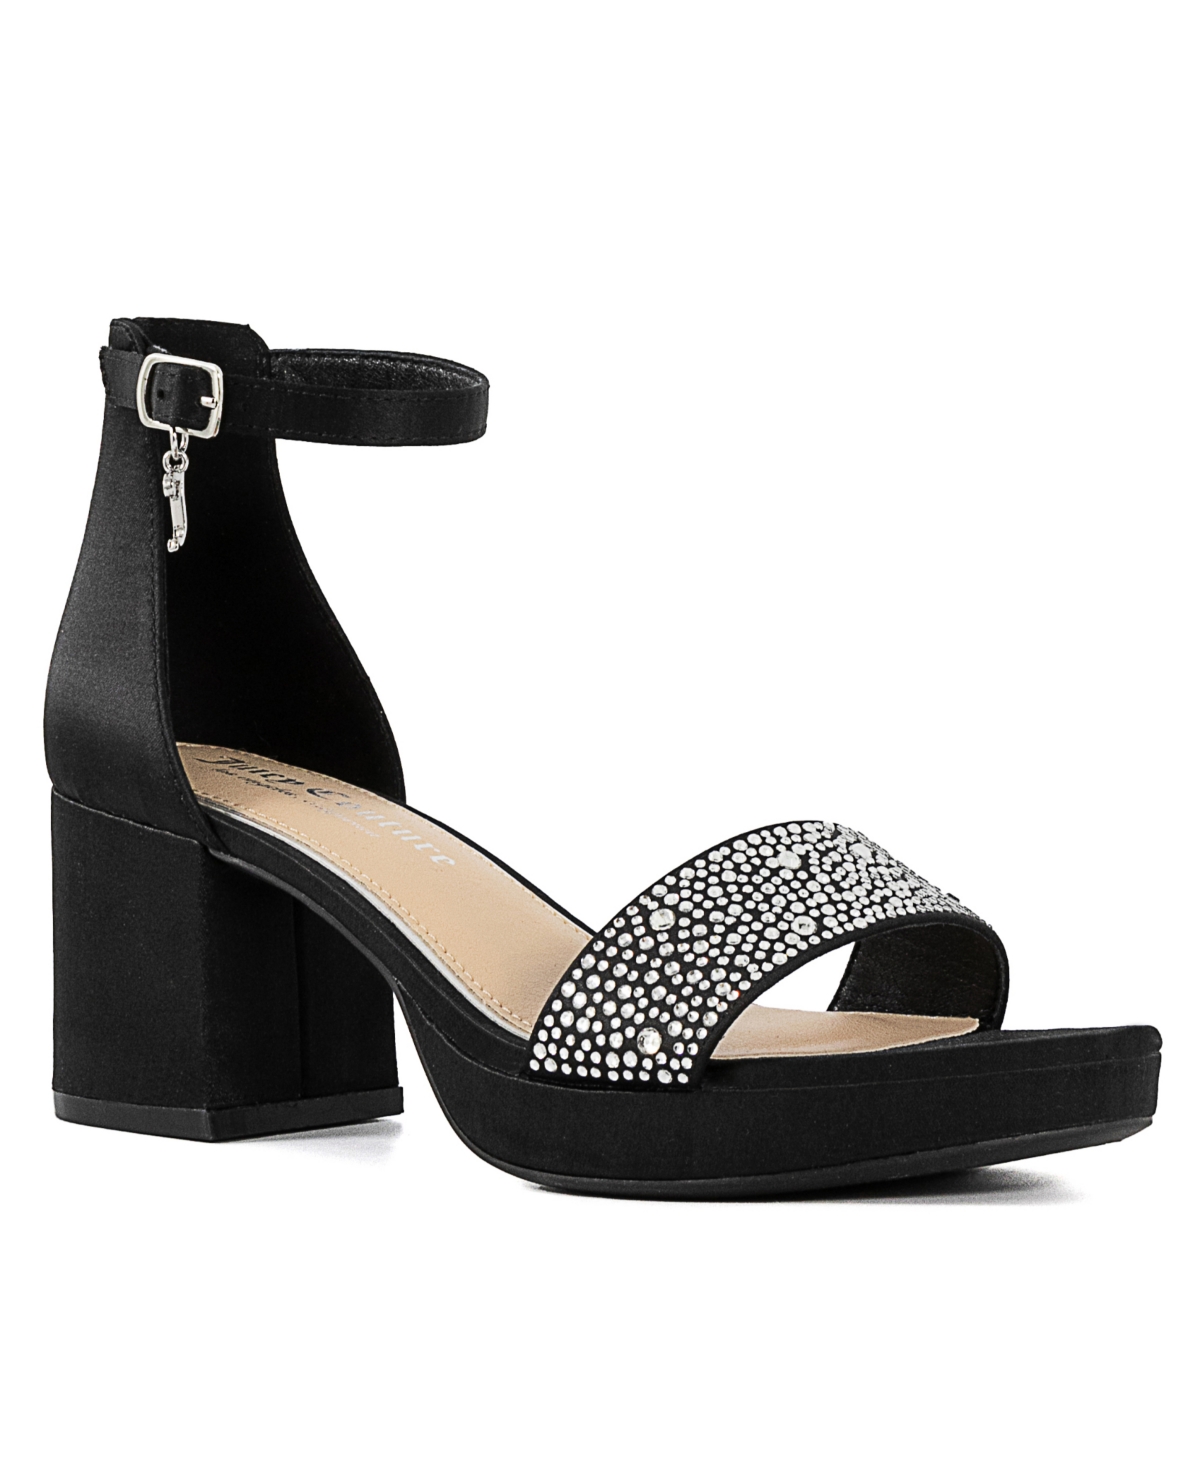 Juicy Couture Women's Nelly Rhinestone Two-piece Platform Dress Sandals In Black Satin